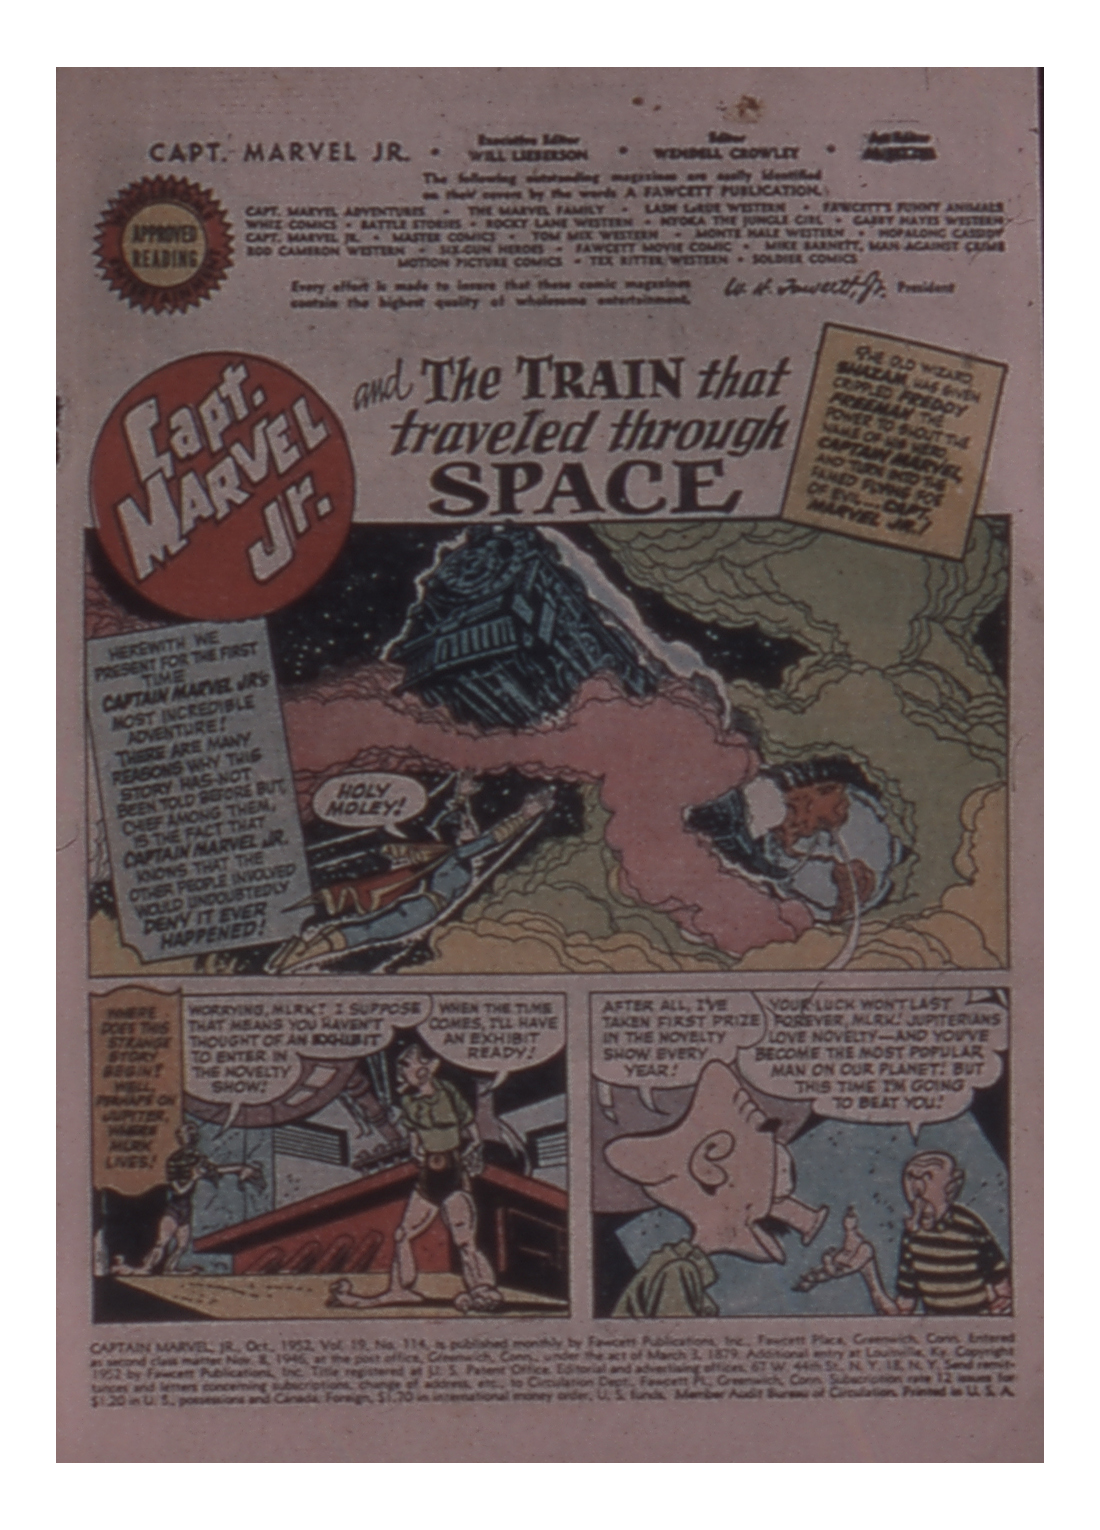 Read online Captain Marvel, Jr. comic -  Issue #114 - 3